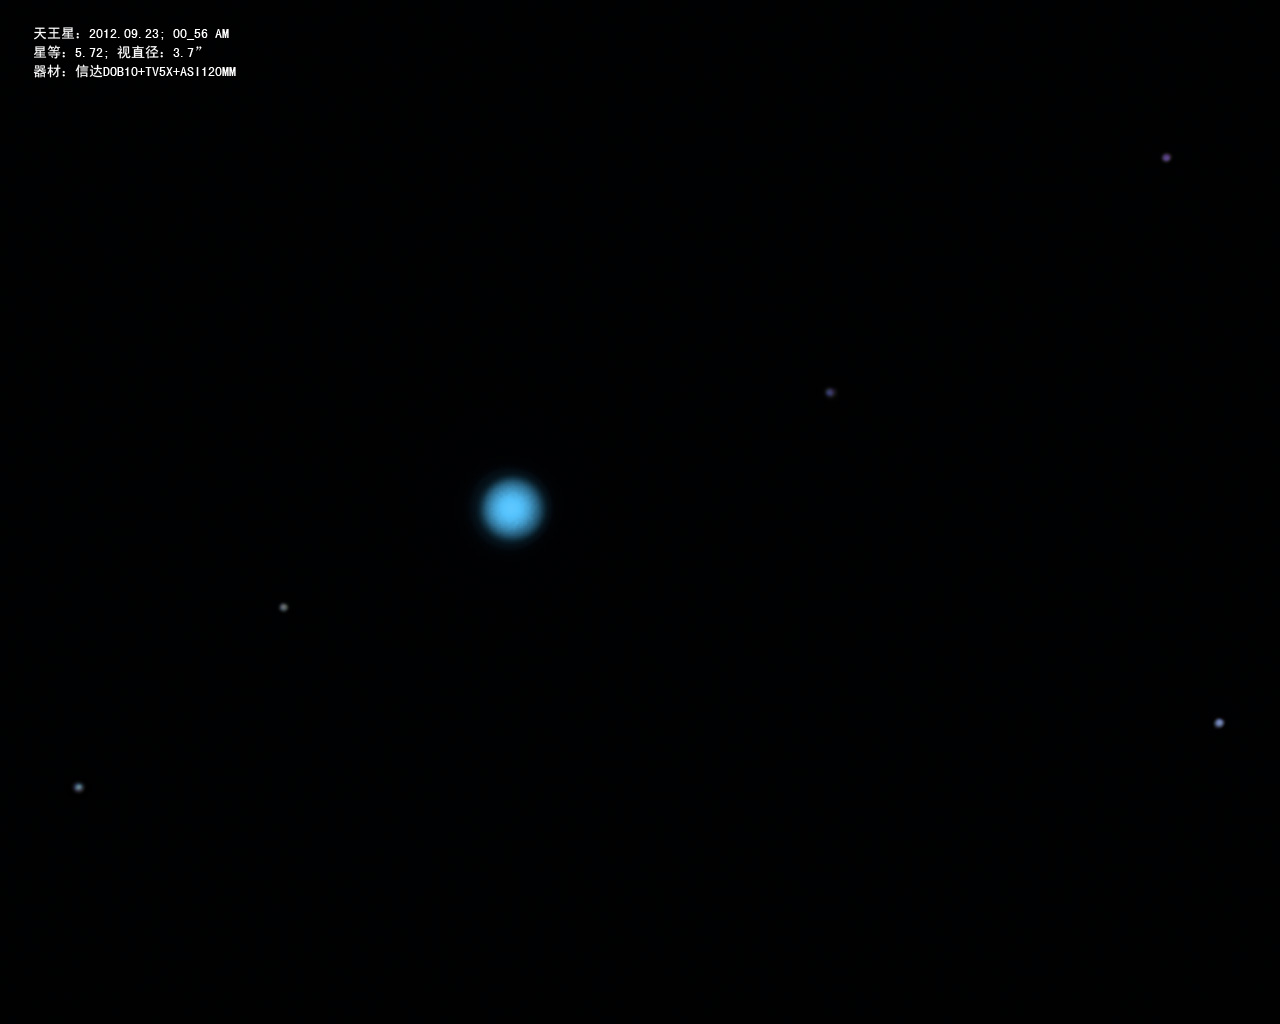 天王星 2012-9-23 00_56_25.jpg